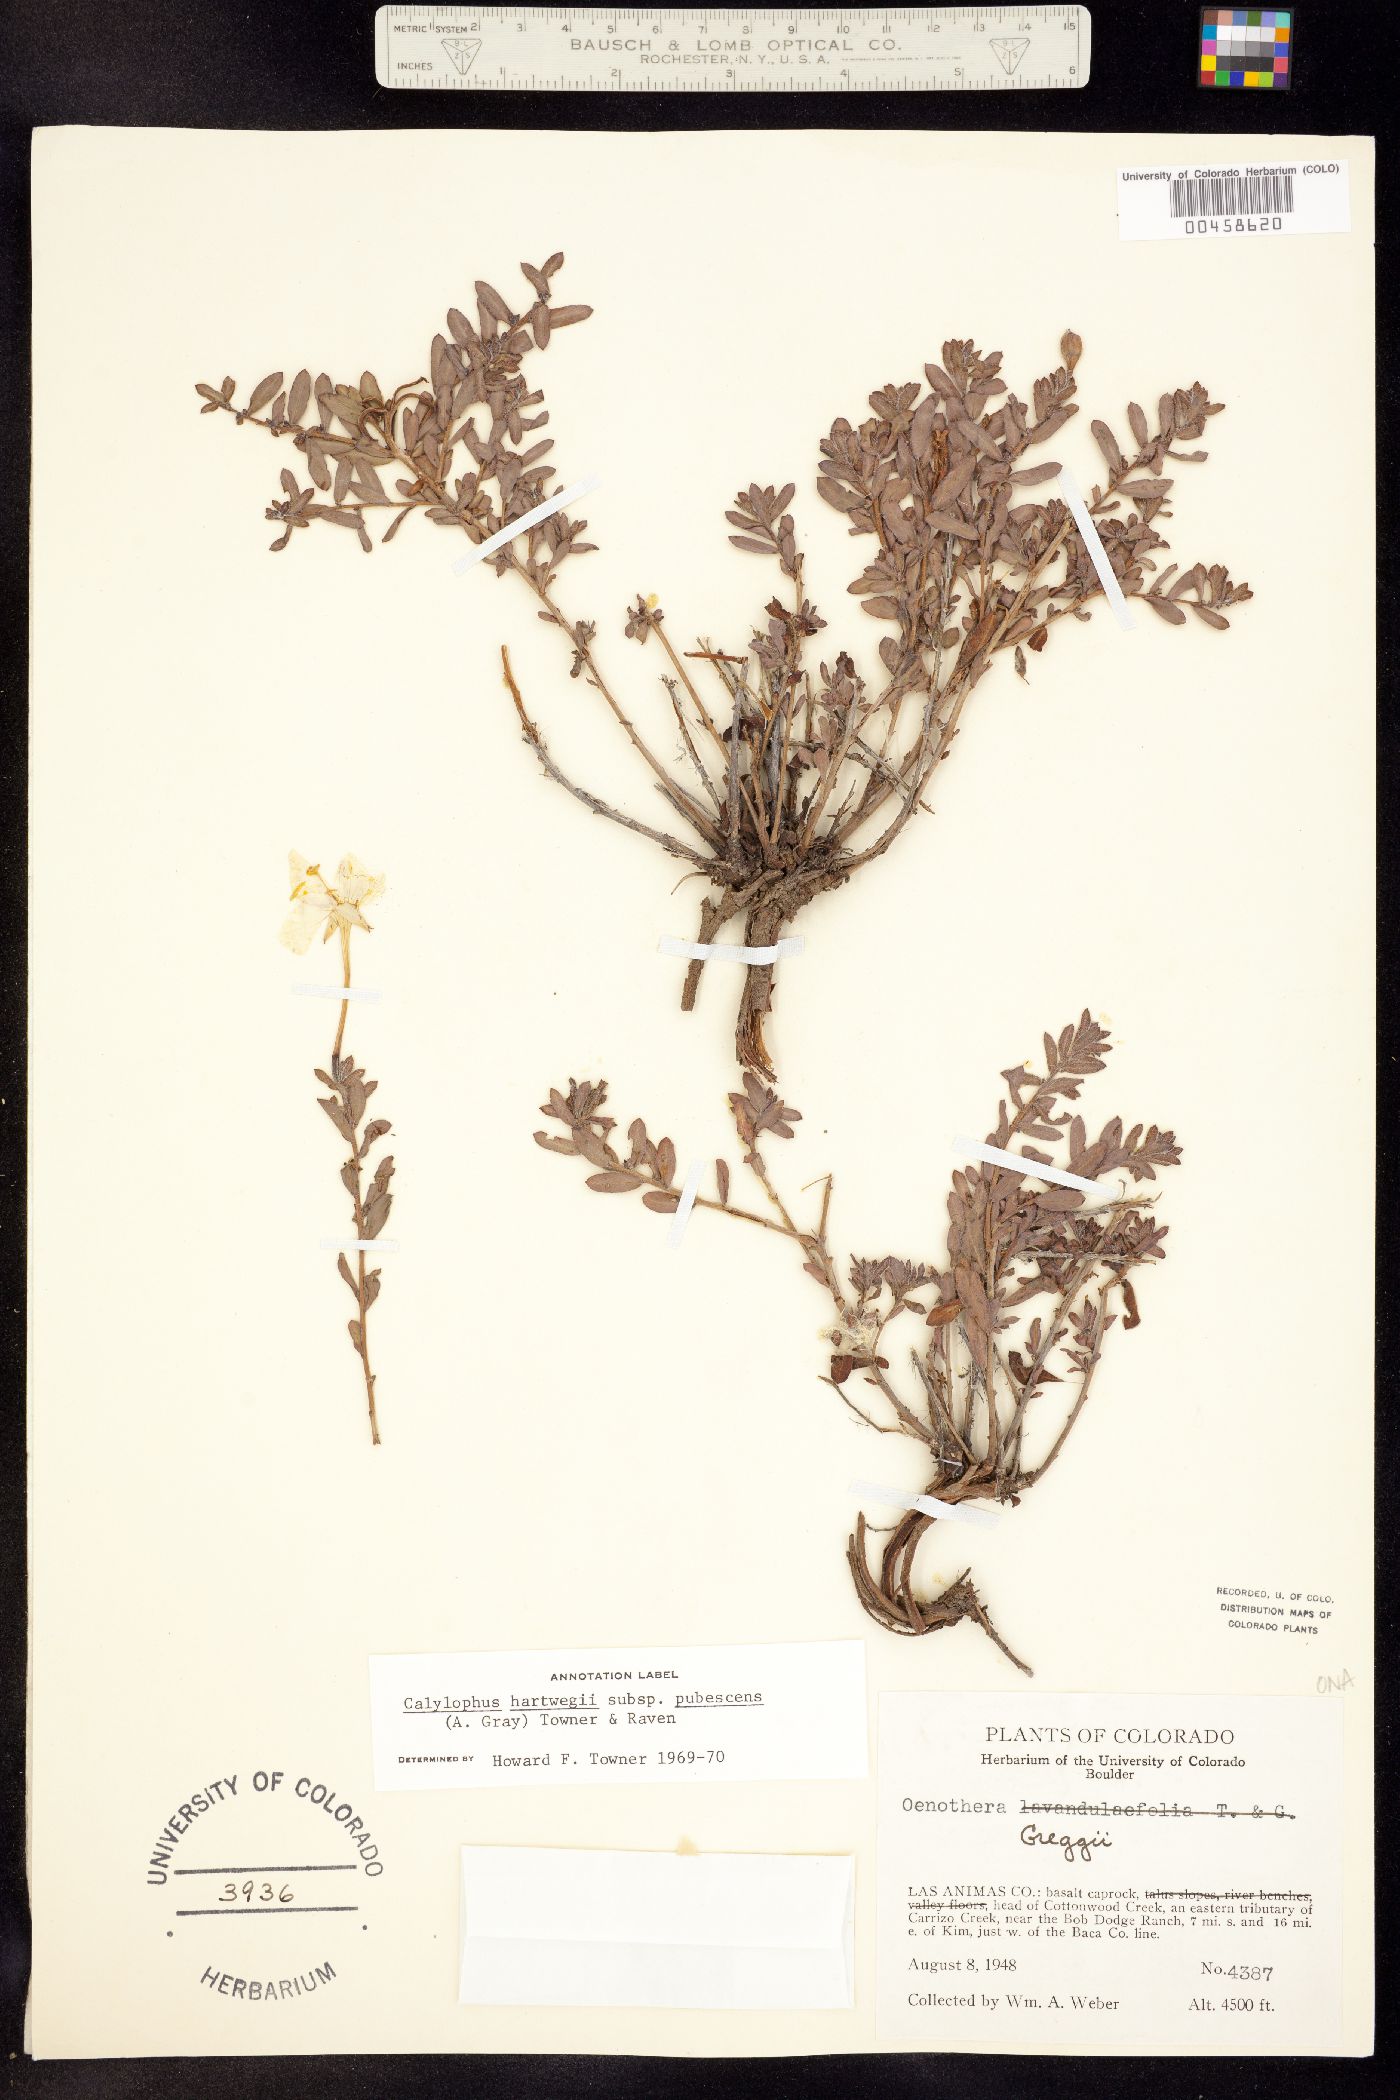 Oenothera hartwegii ssp. pubescens image